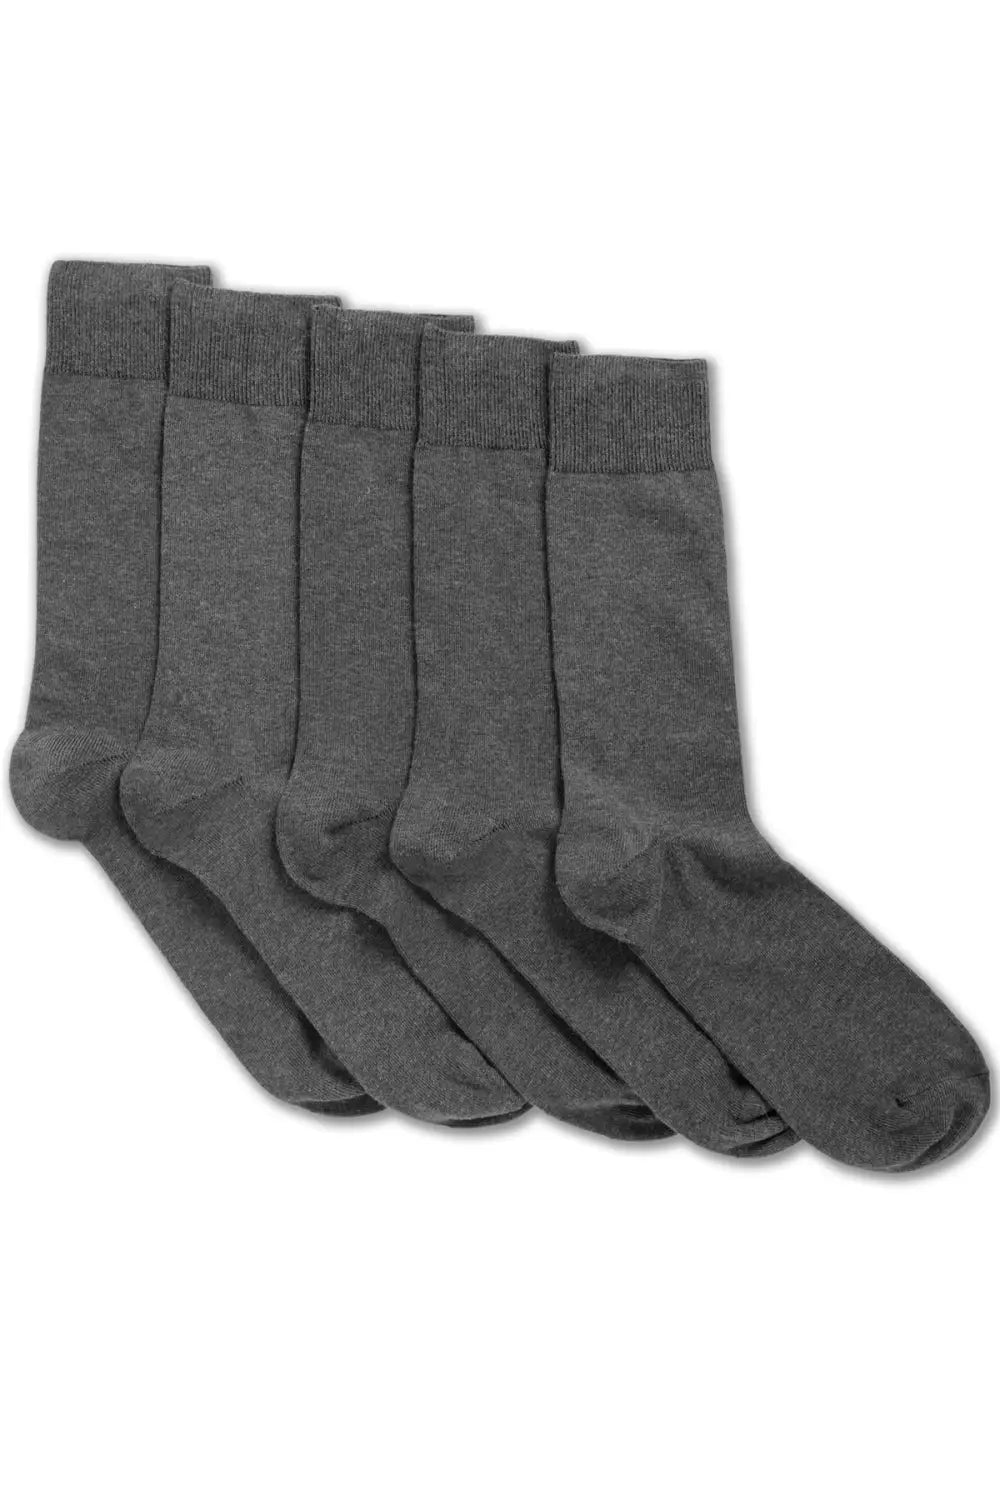 John Lewis Plain Organic Cotton Socks 5 Pack